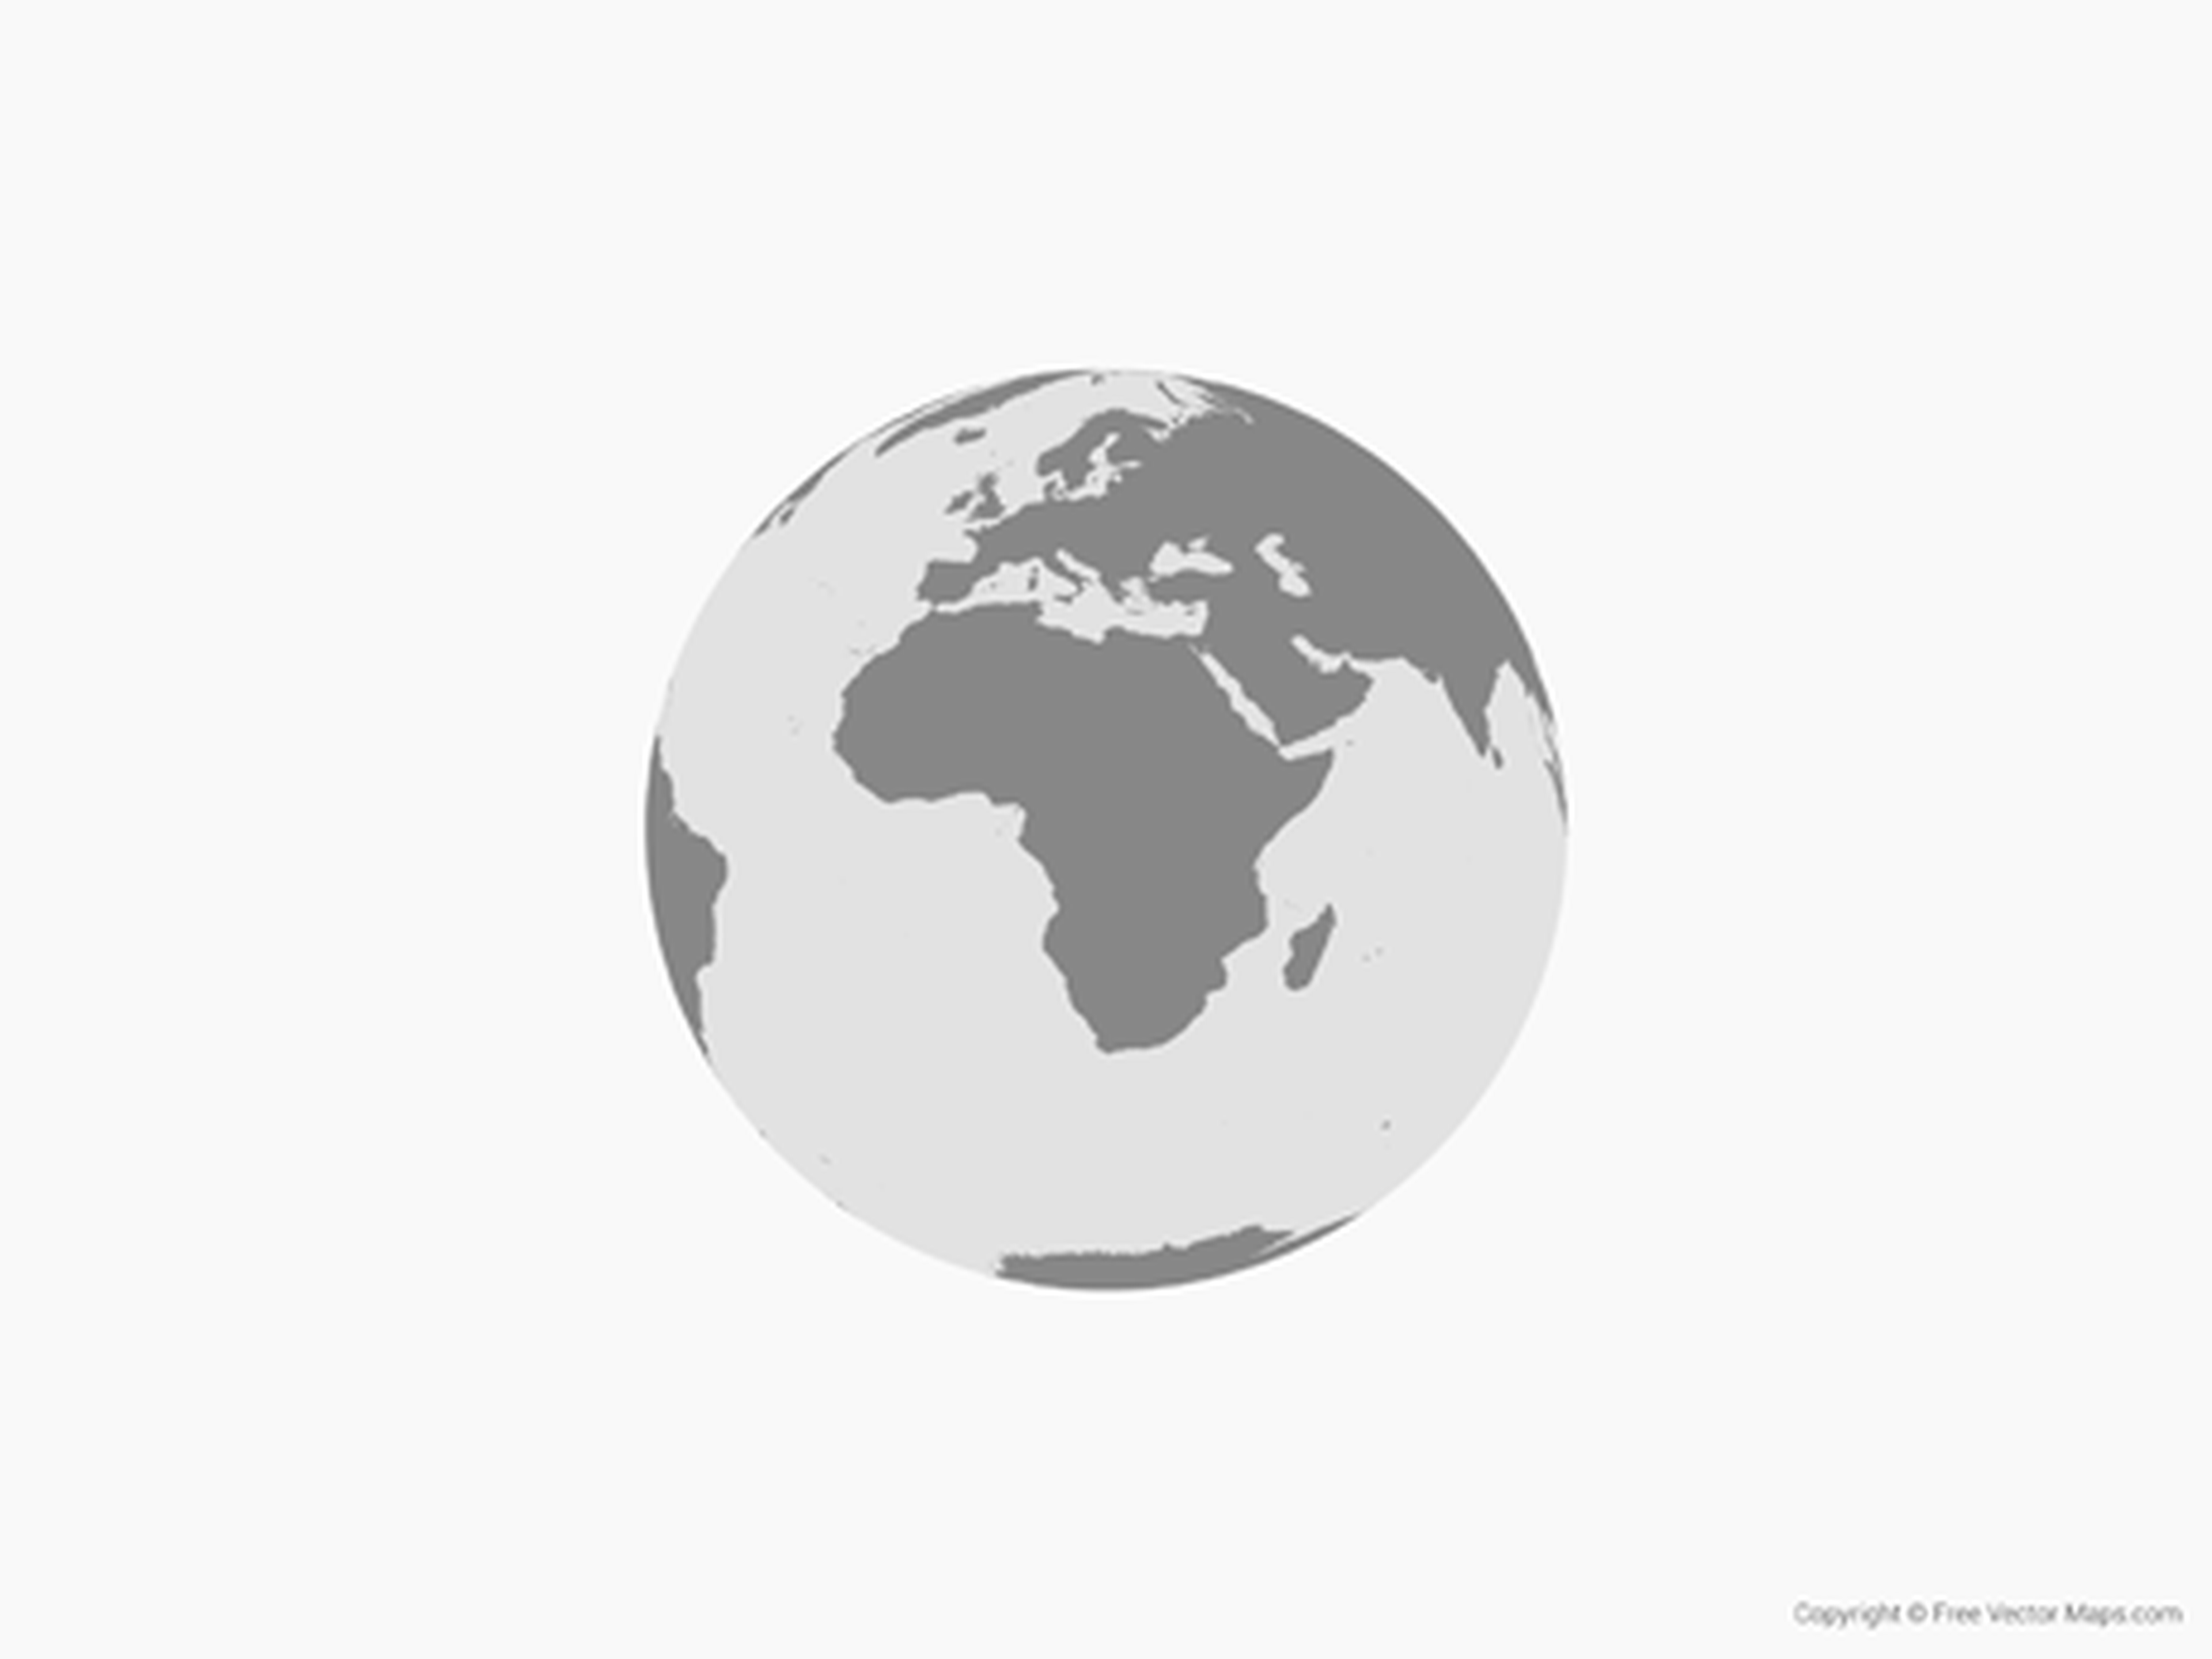 Freevectormaps Mapa del mundo